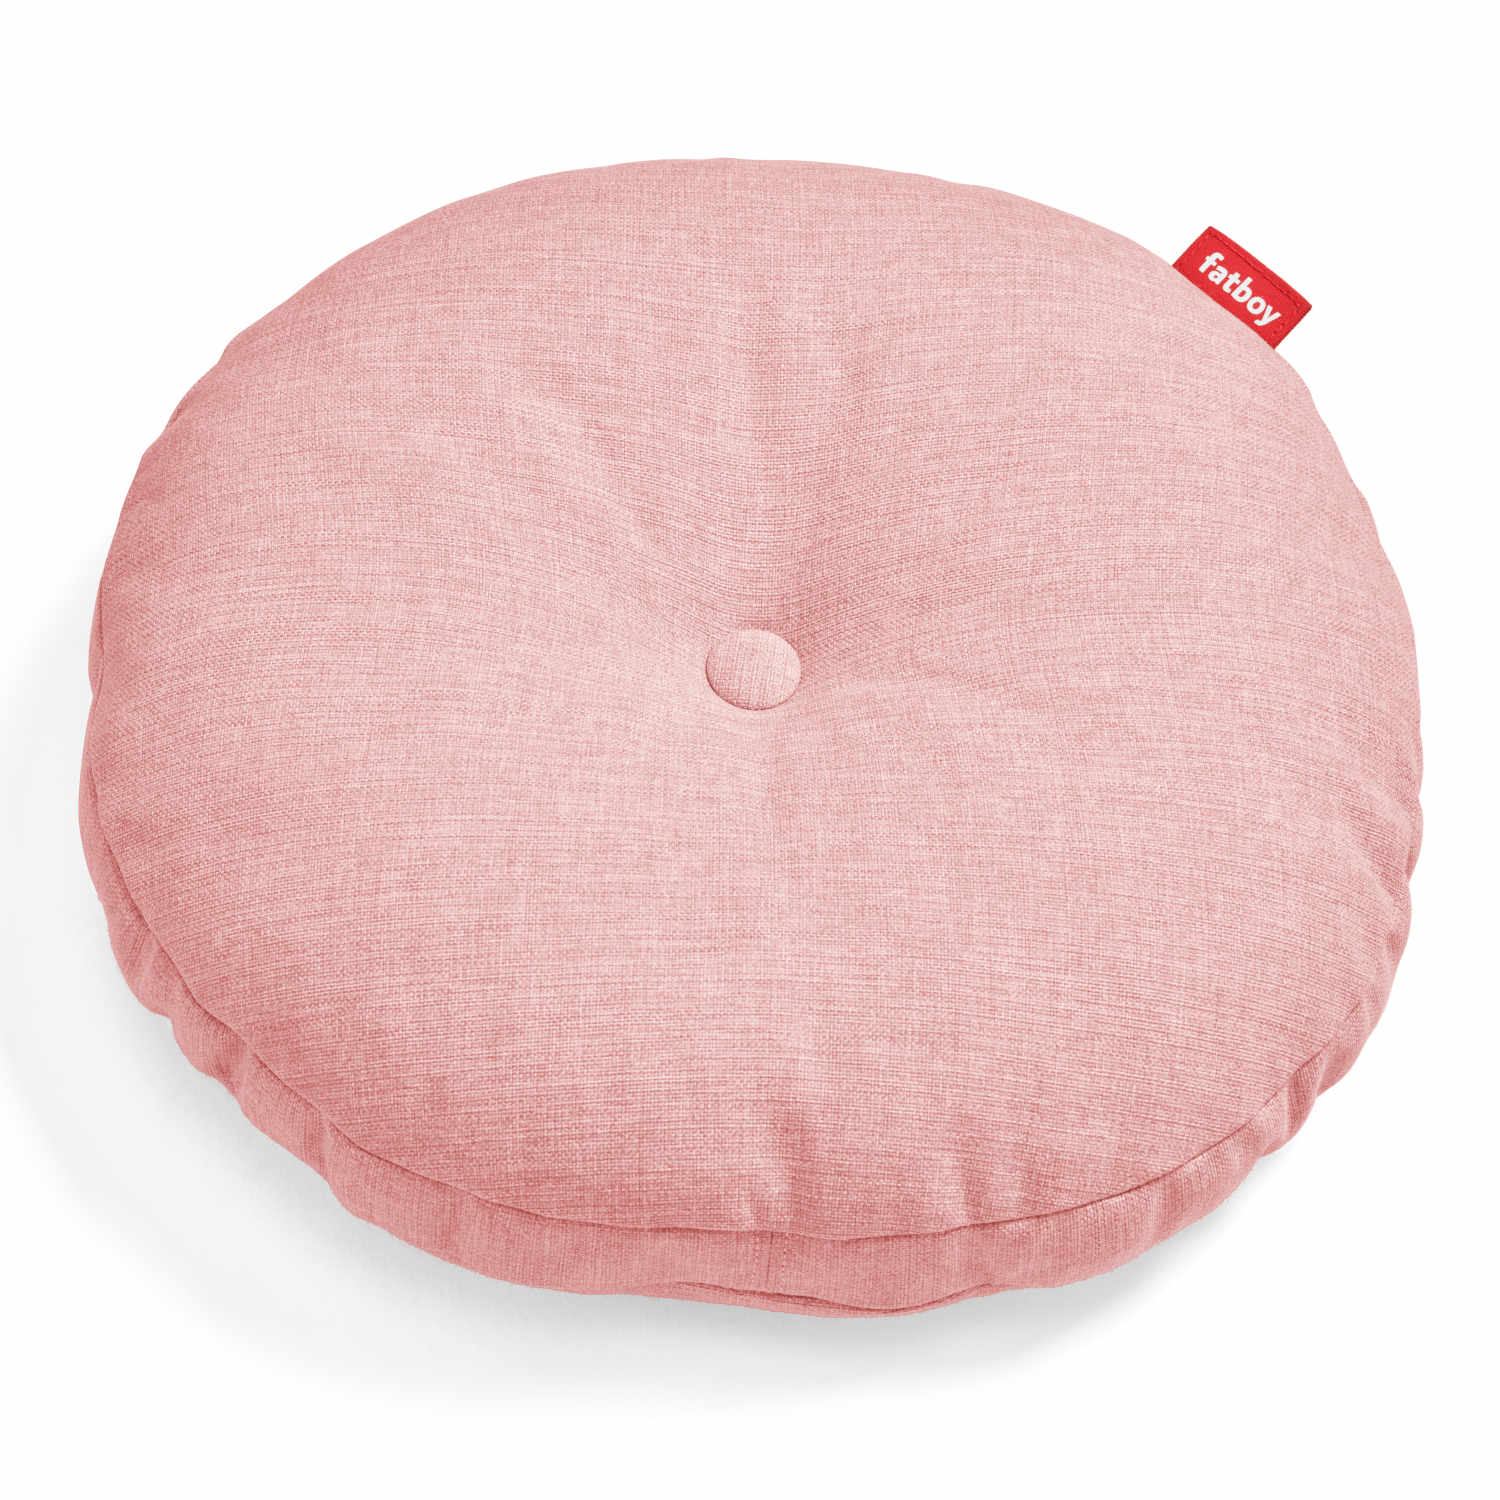 Circle Pillow Sitzkissen, Farbe blossom von Fatboy